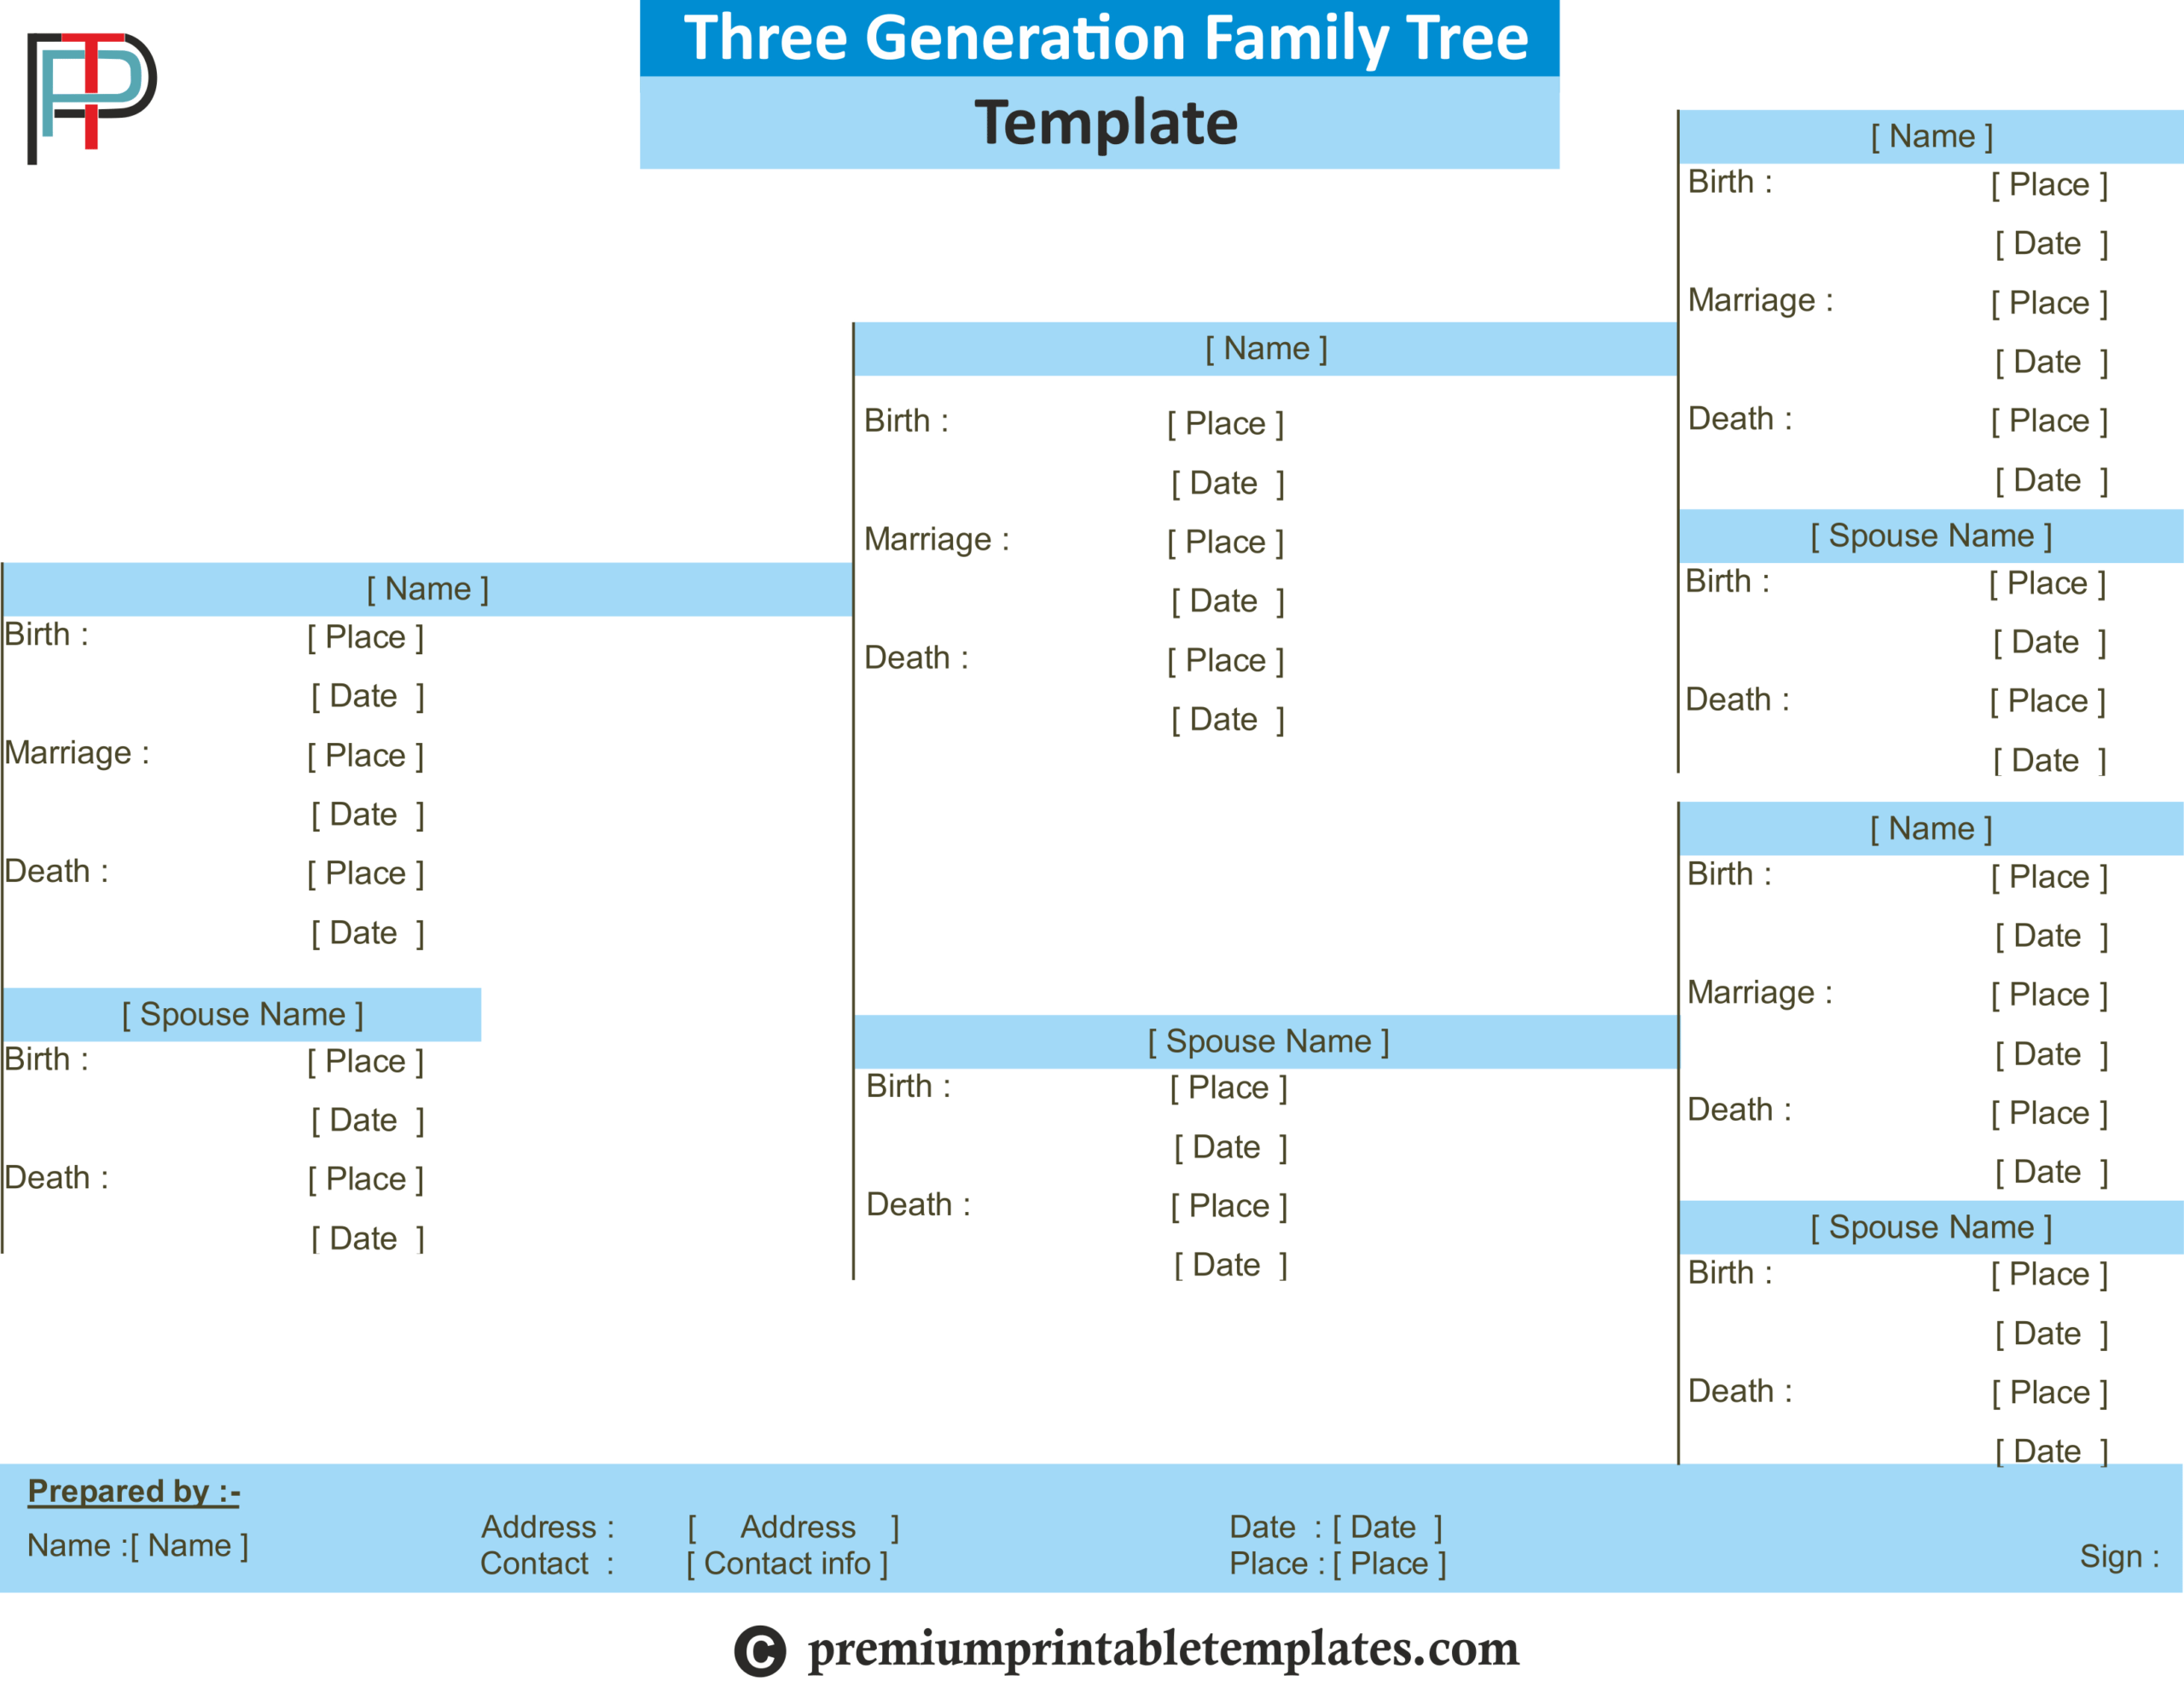 3 Generation Family Tree | Premium Printable Templates Throughout Blank Family Tree Template 3 Generations